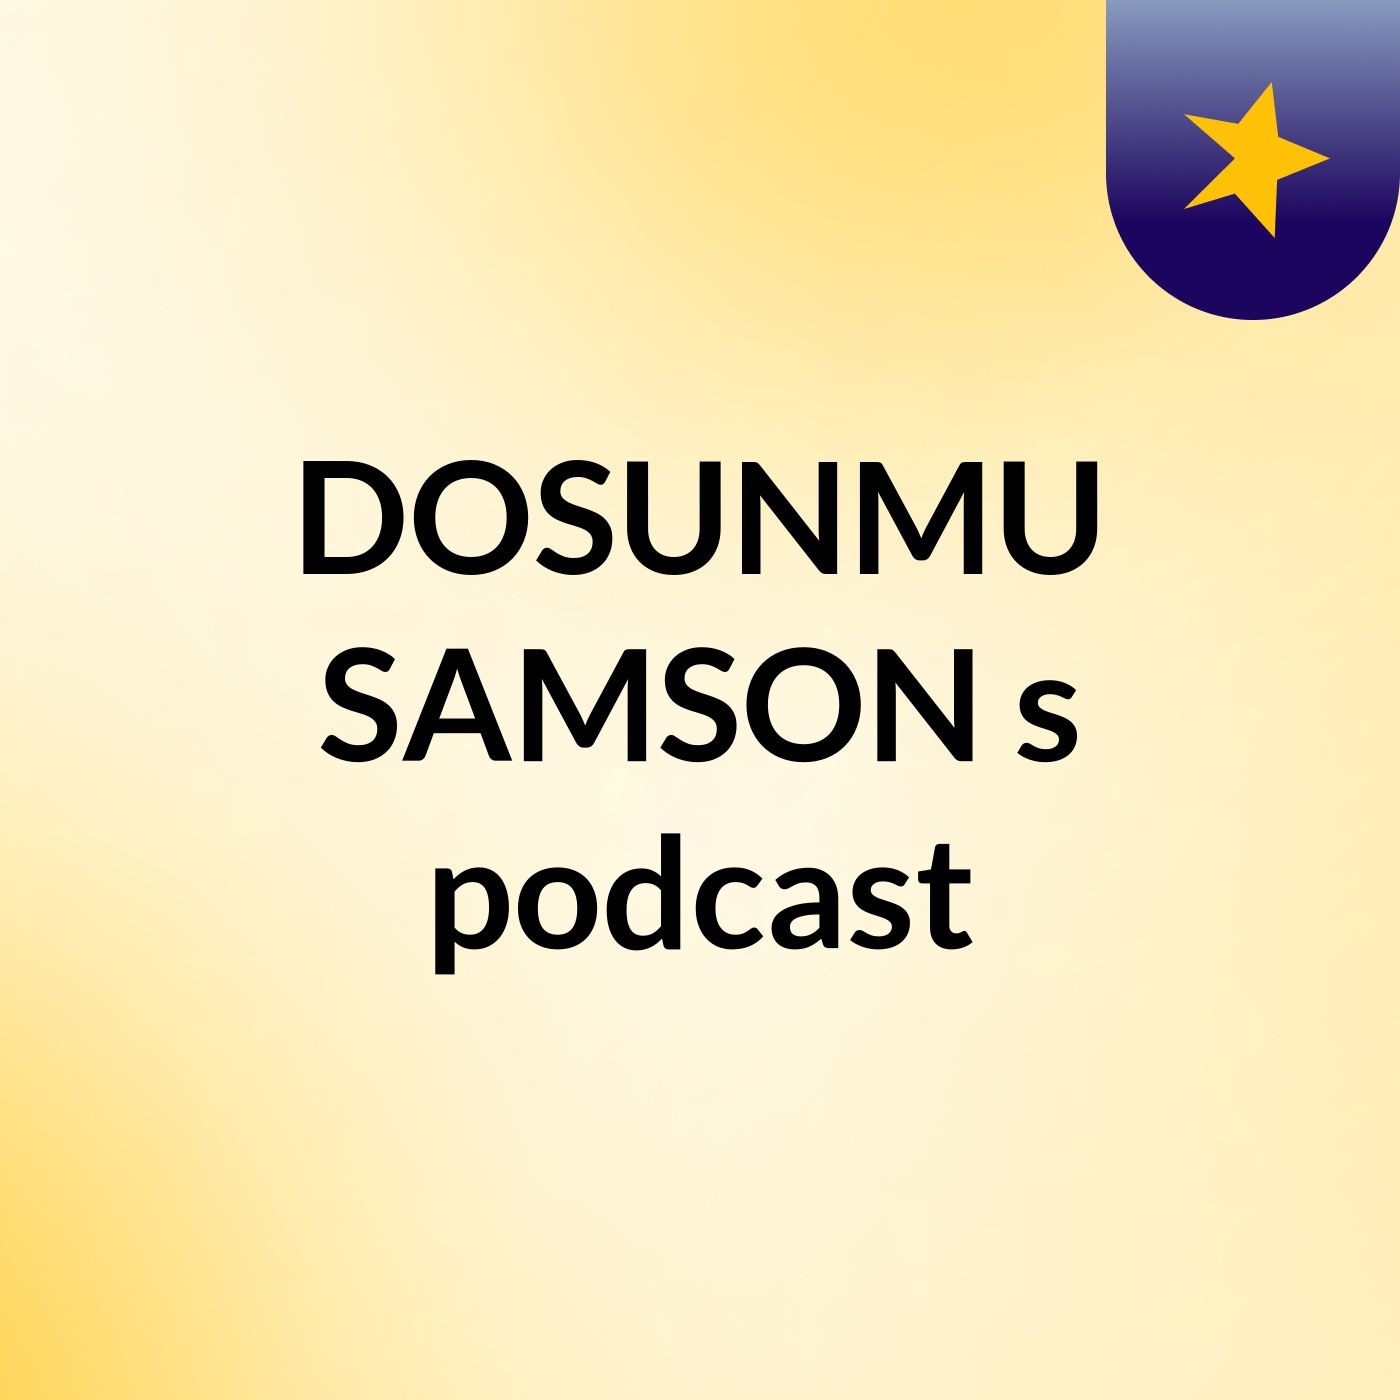 Episode 11 - DOSUNMU SAMSON's podcast